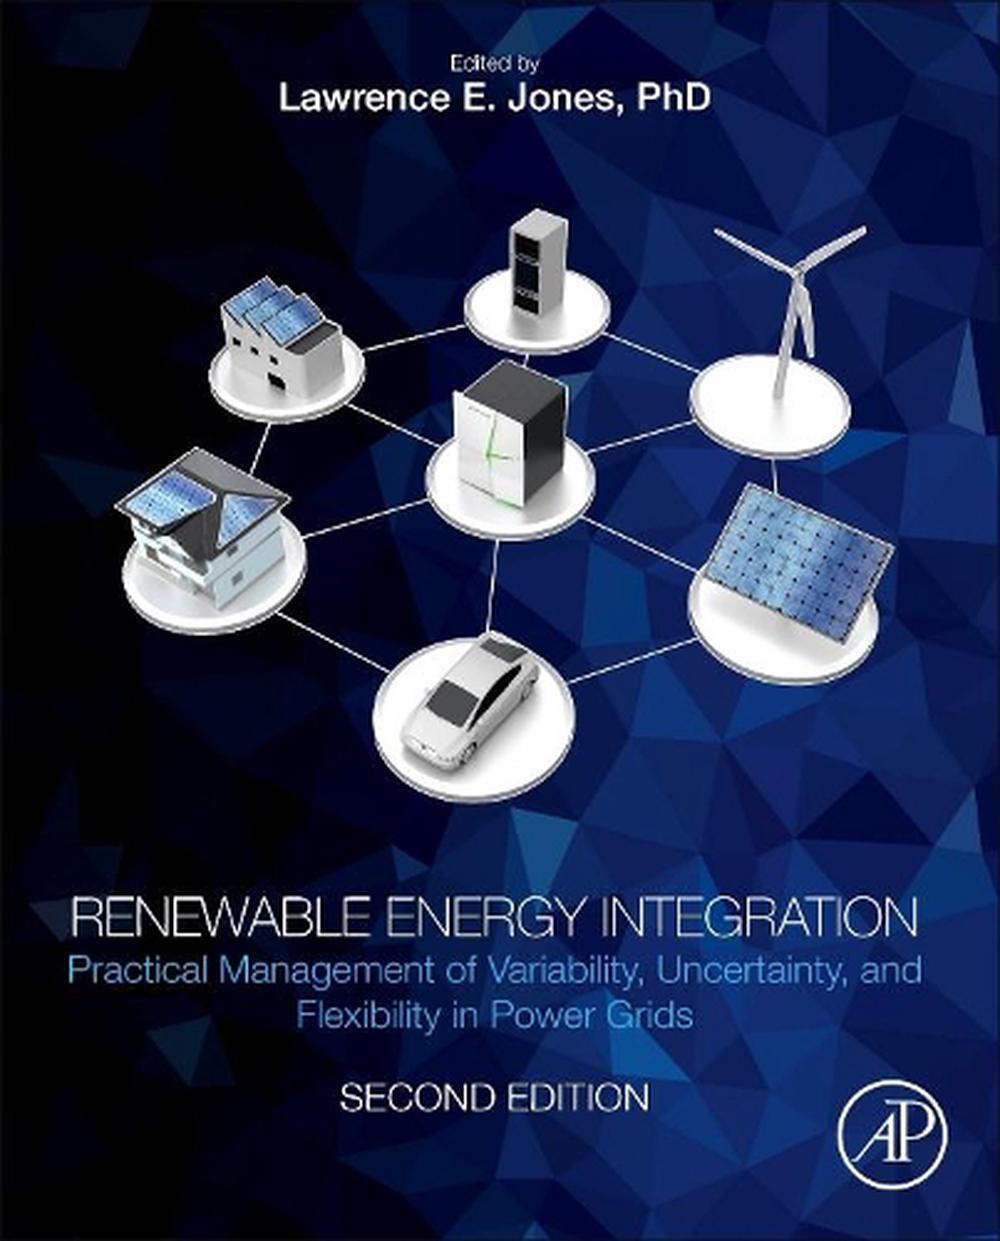 dissertation renewable energy management